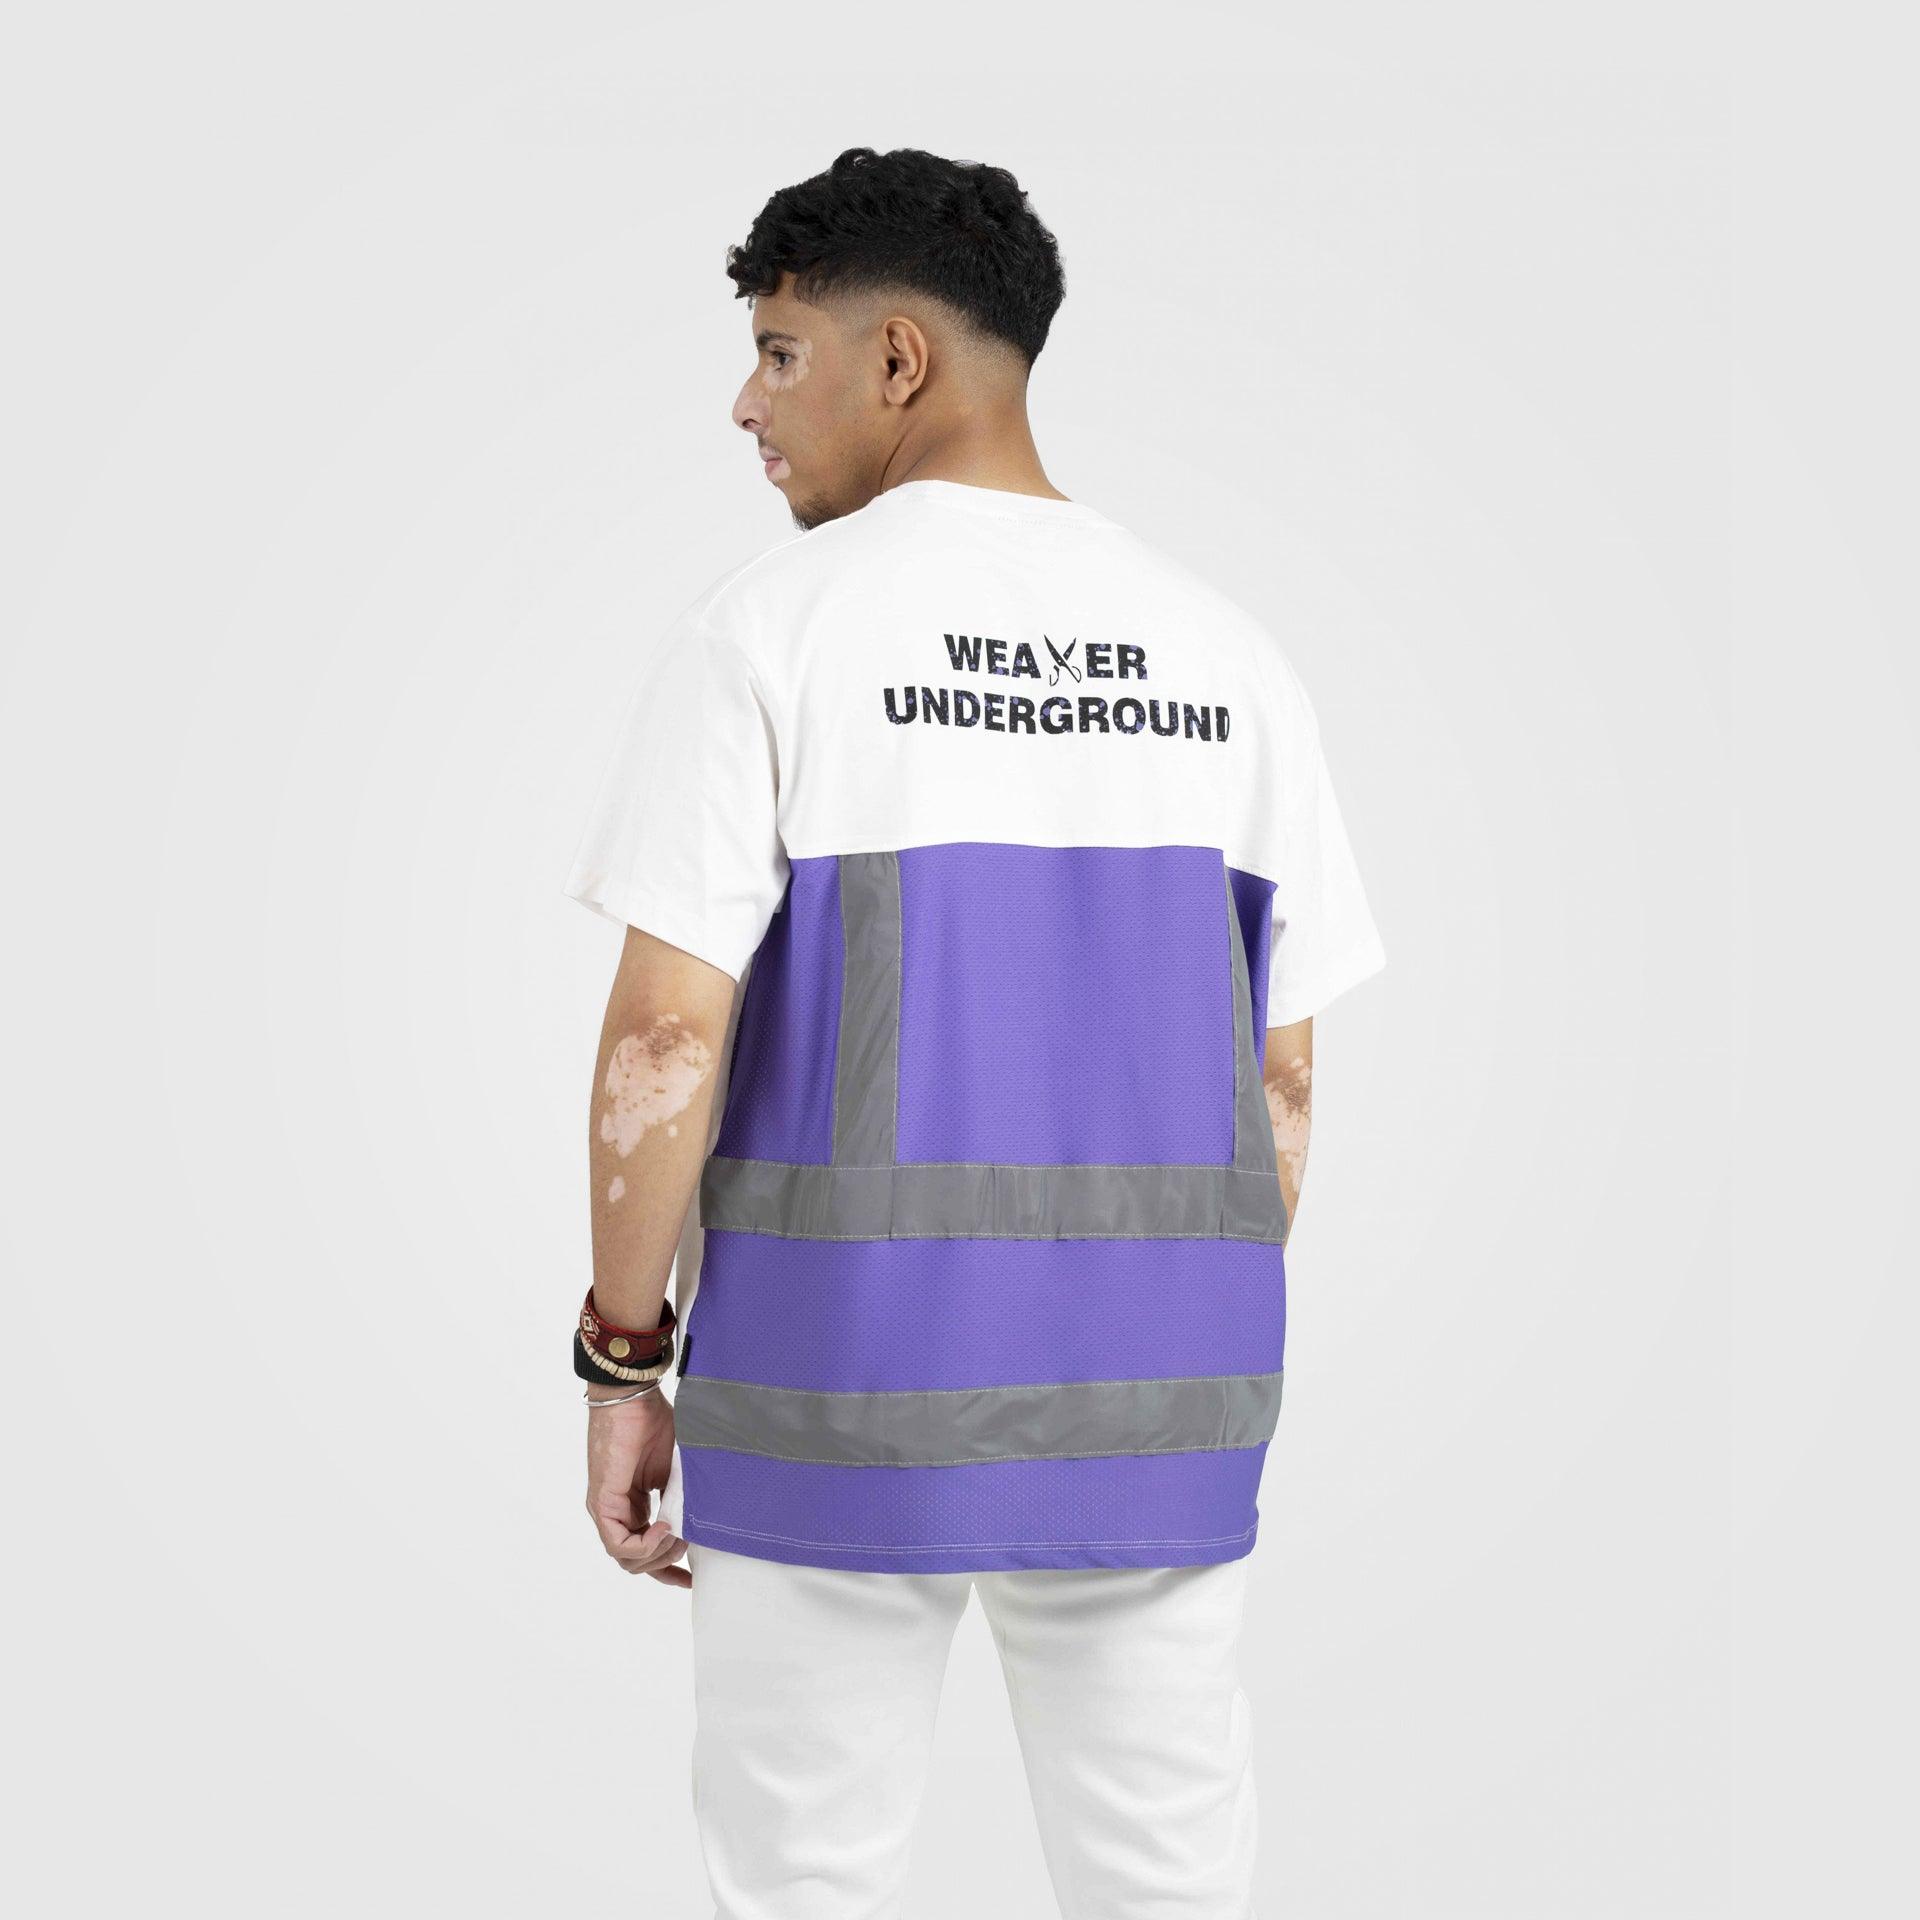 White & Purple Underground T-shirt From Weaver Design - WECRE8